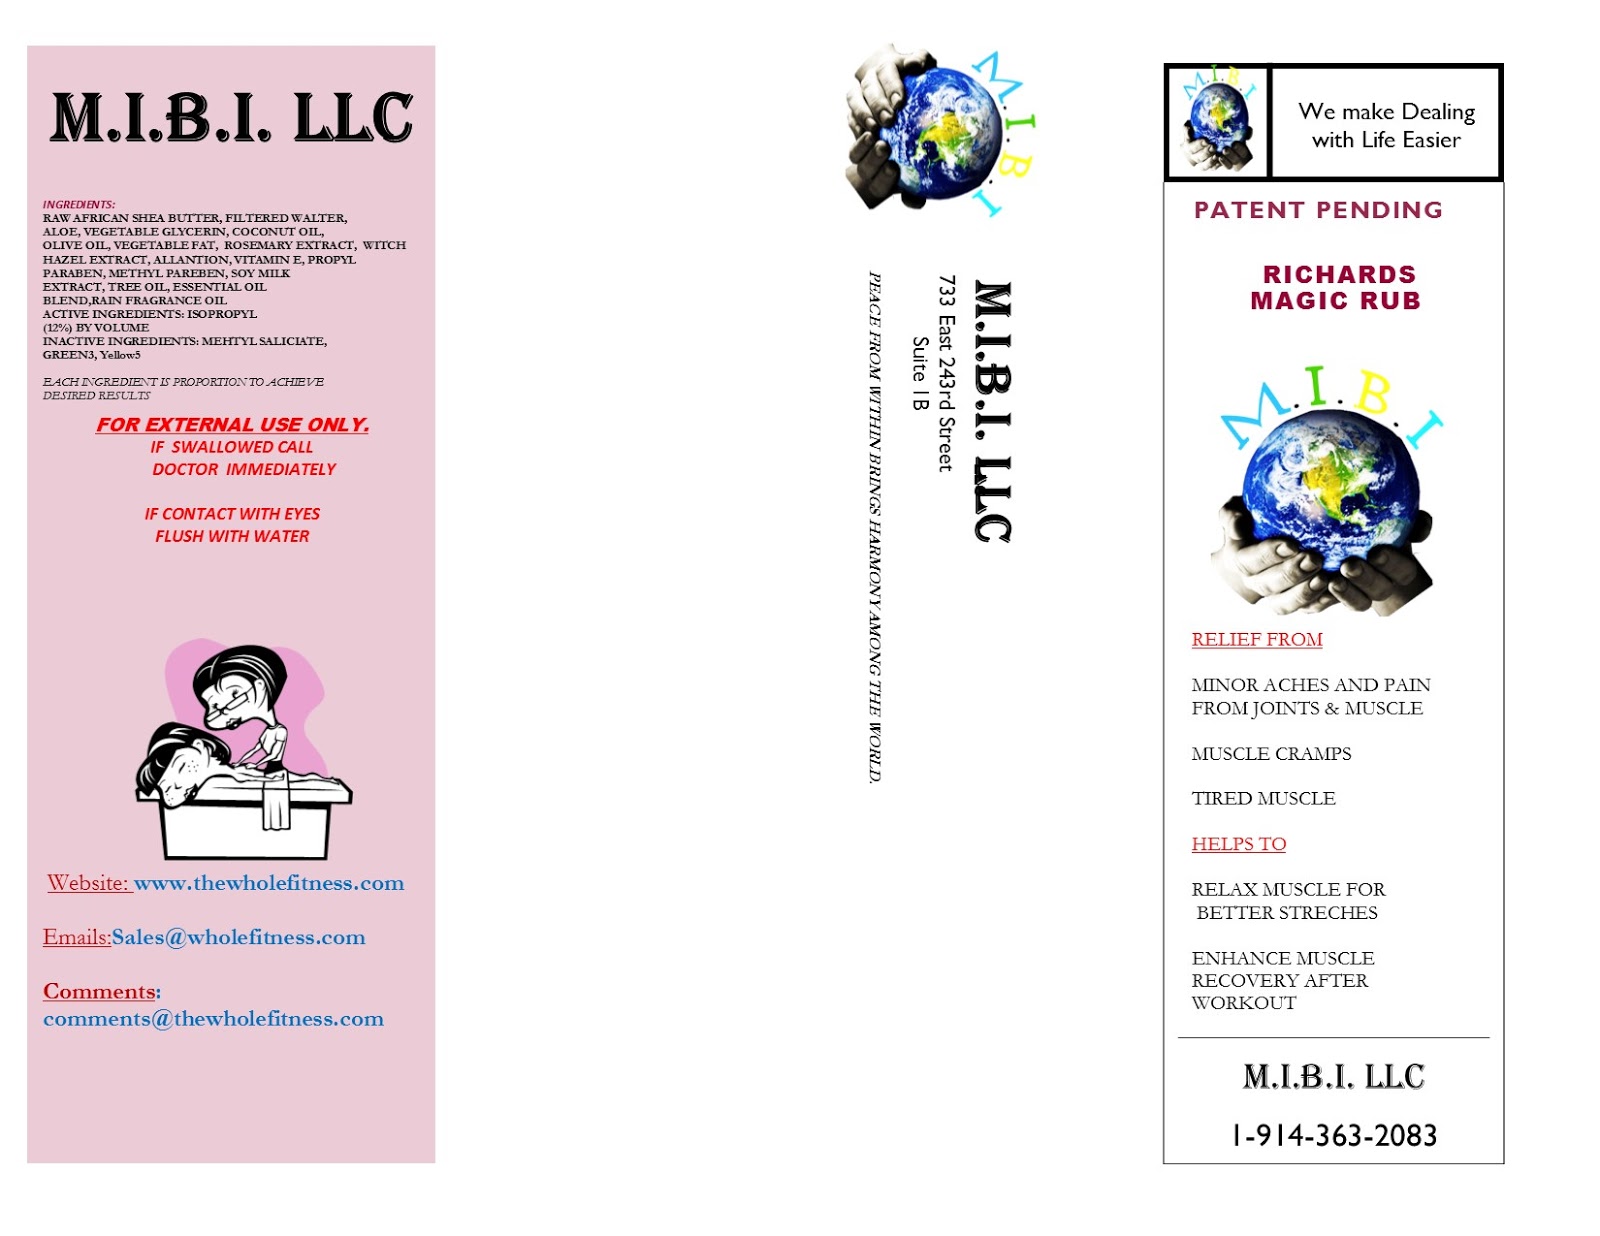 Photo of M.I.B.I. LLC in Bronx City, New York, United States - 3 Picture of Point of interest, Establishment, Health